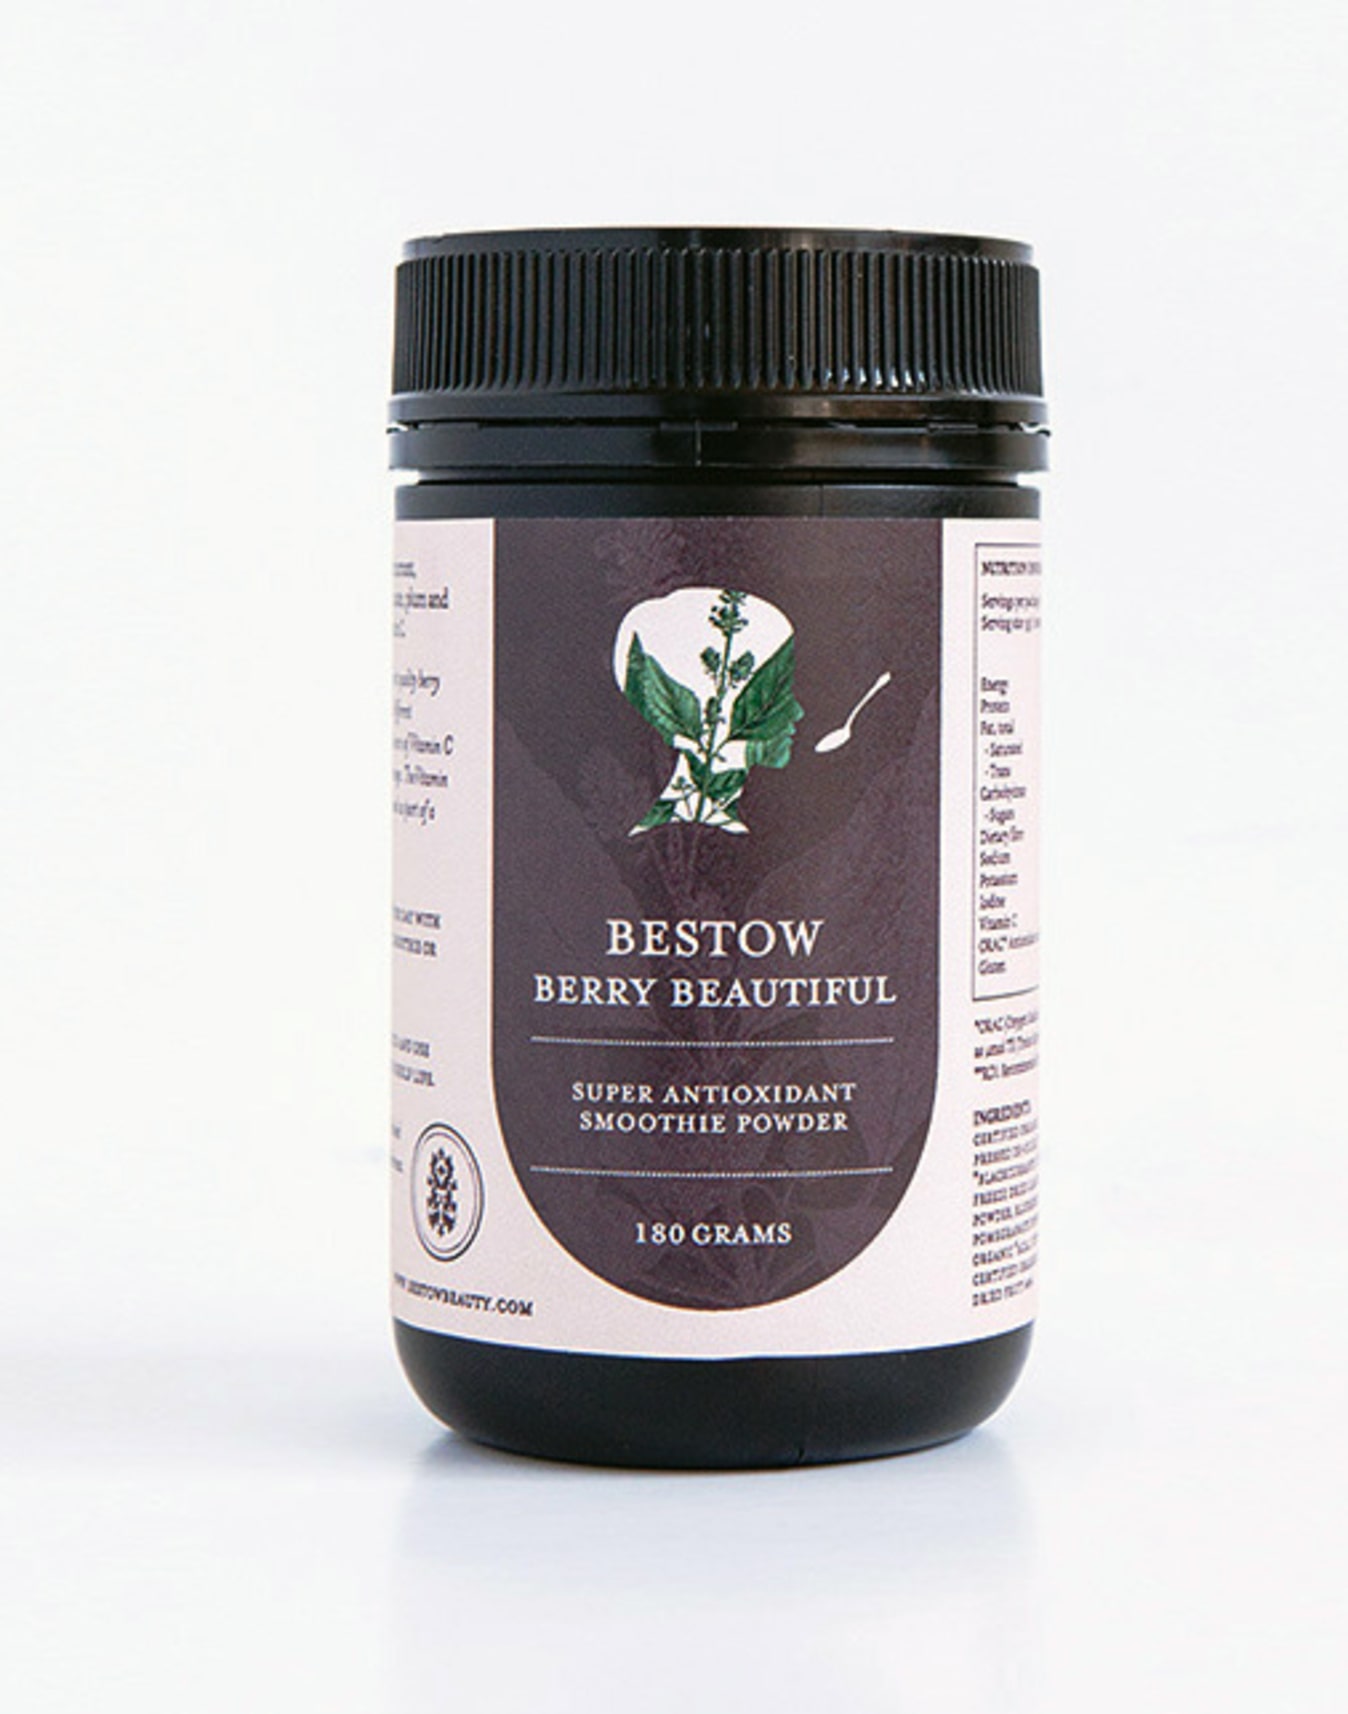 Bestow Berry Beautiful Anti-Oxidant Powder